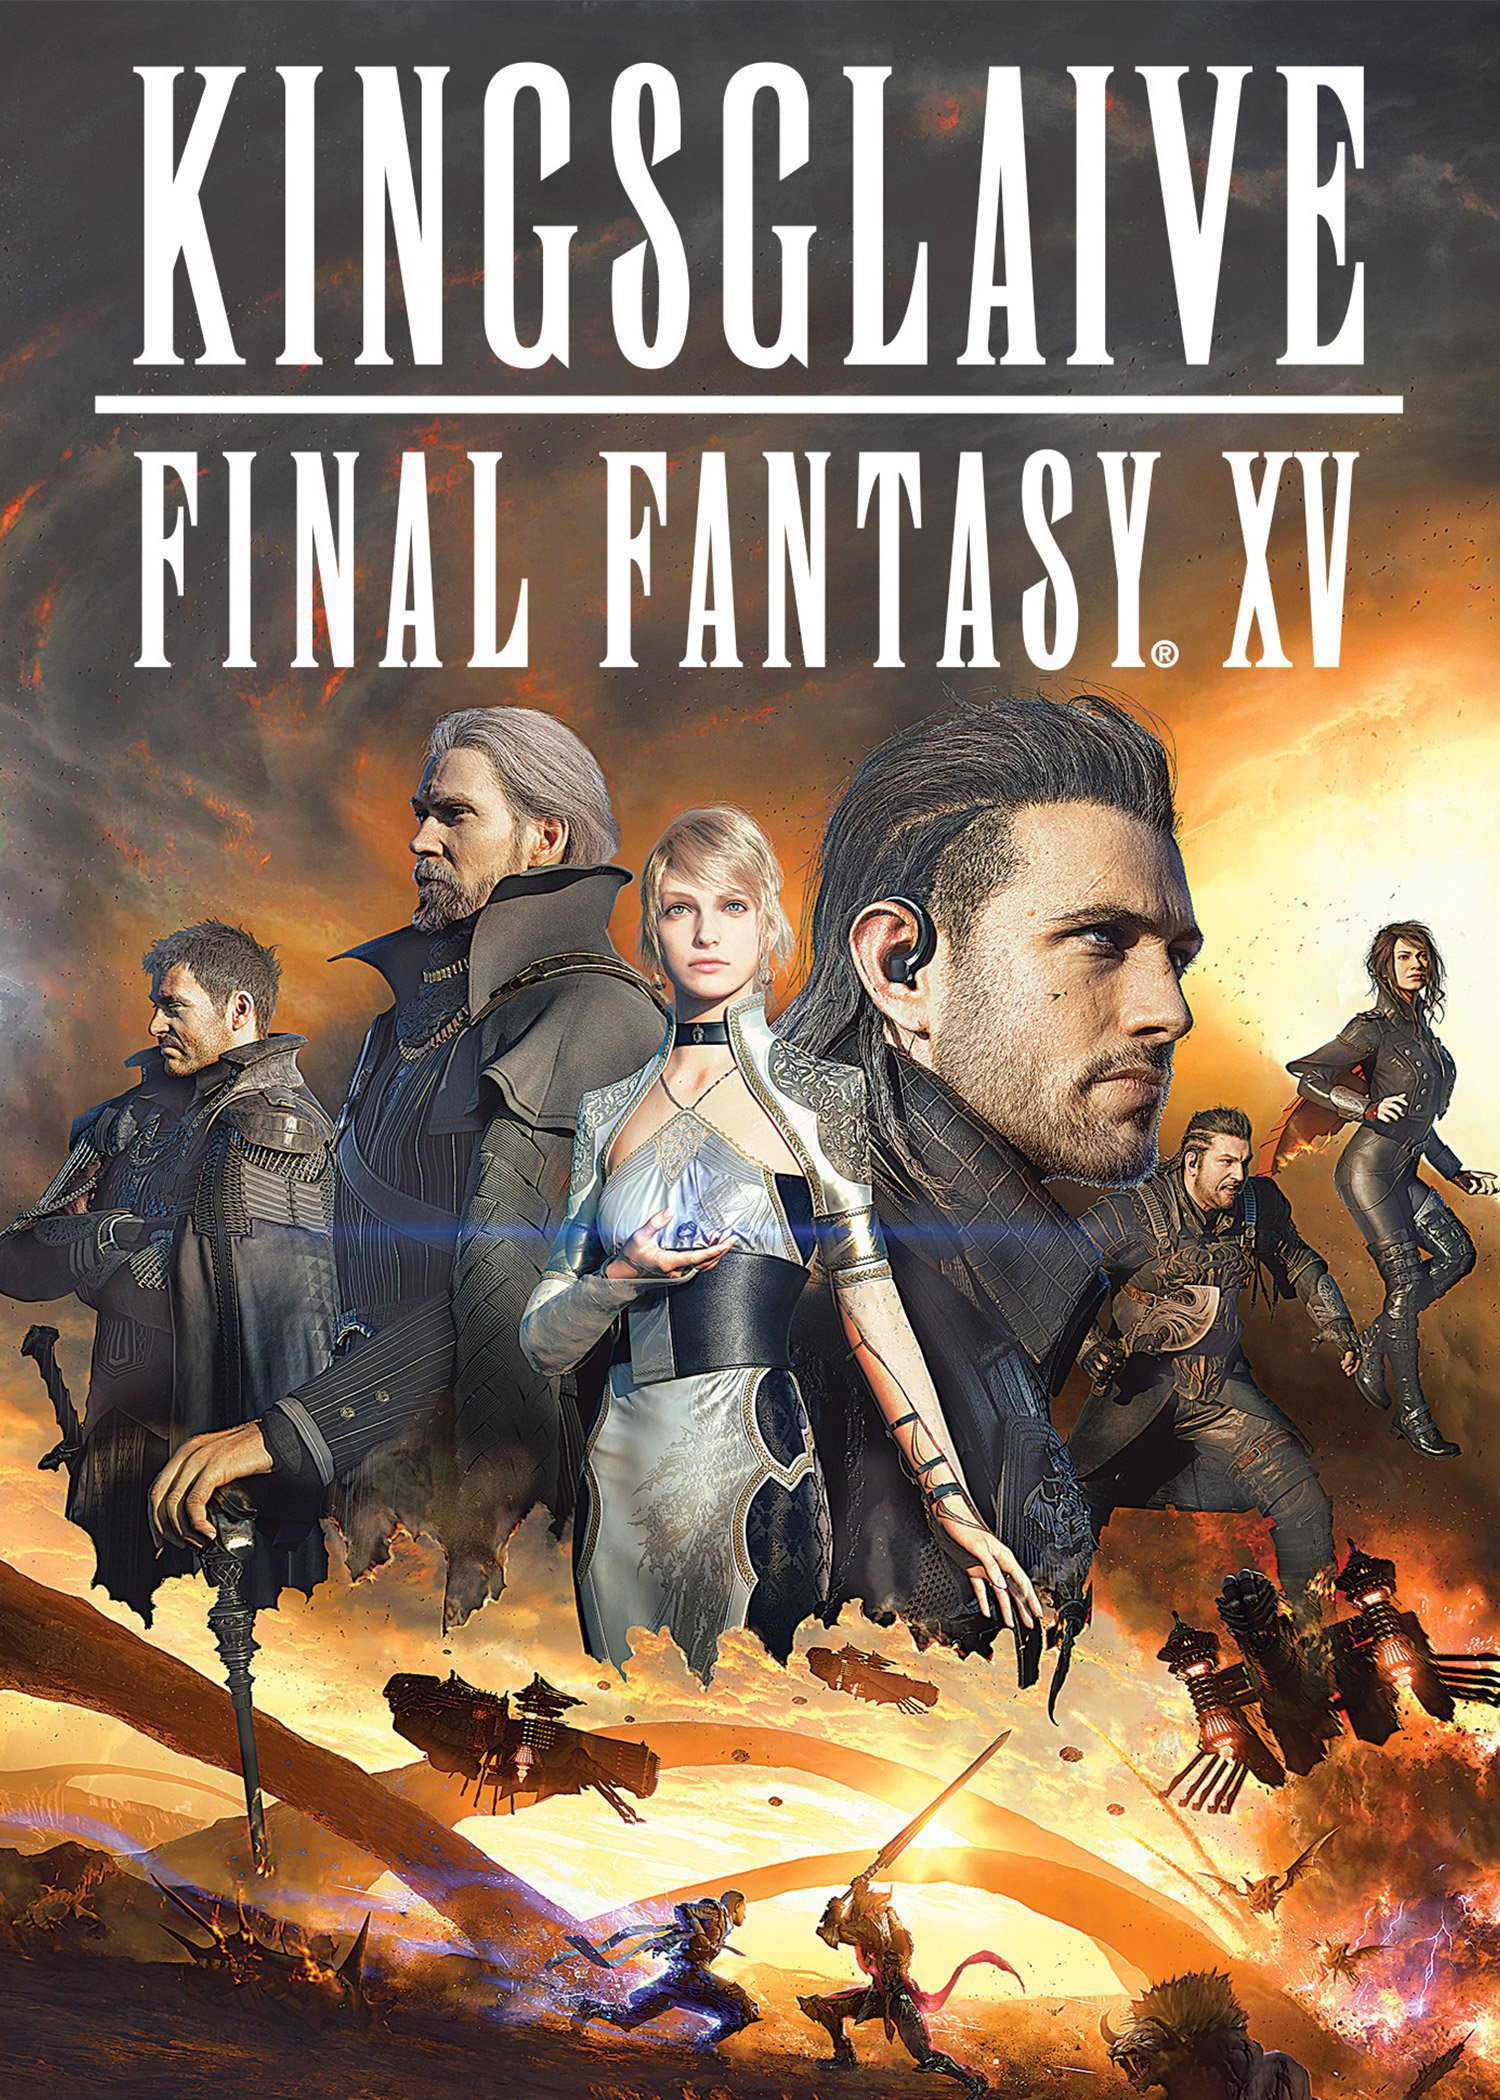 Watch Kingsglaive: Final Fantasy XV in | Rakuten Wuaki